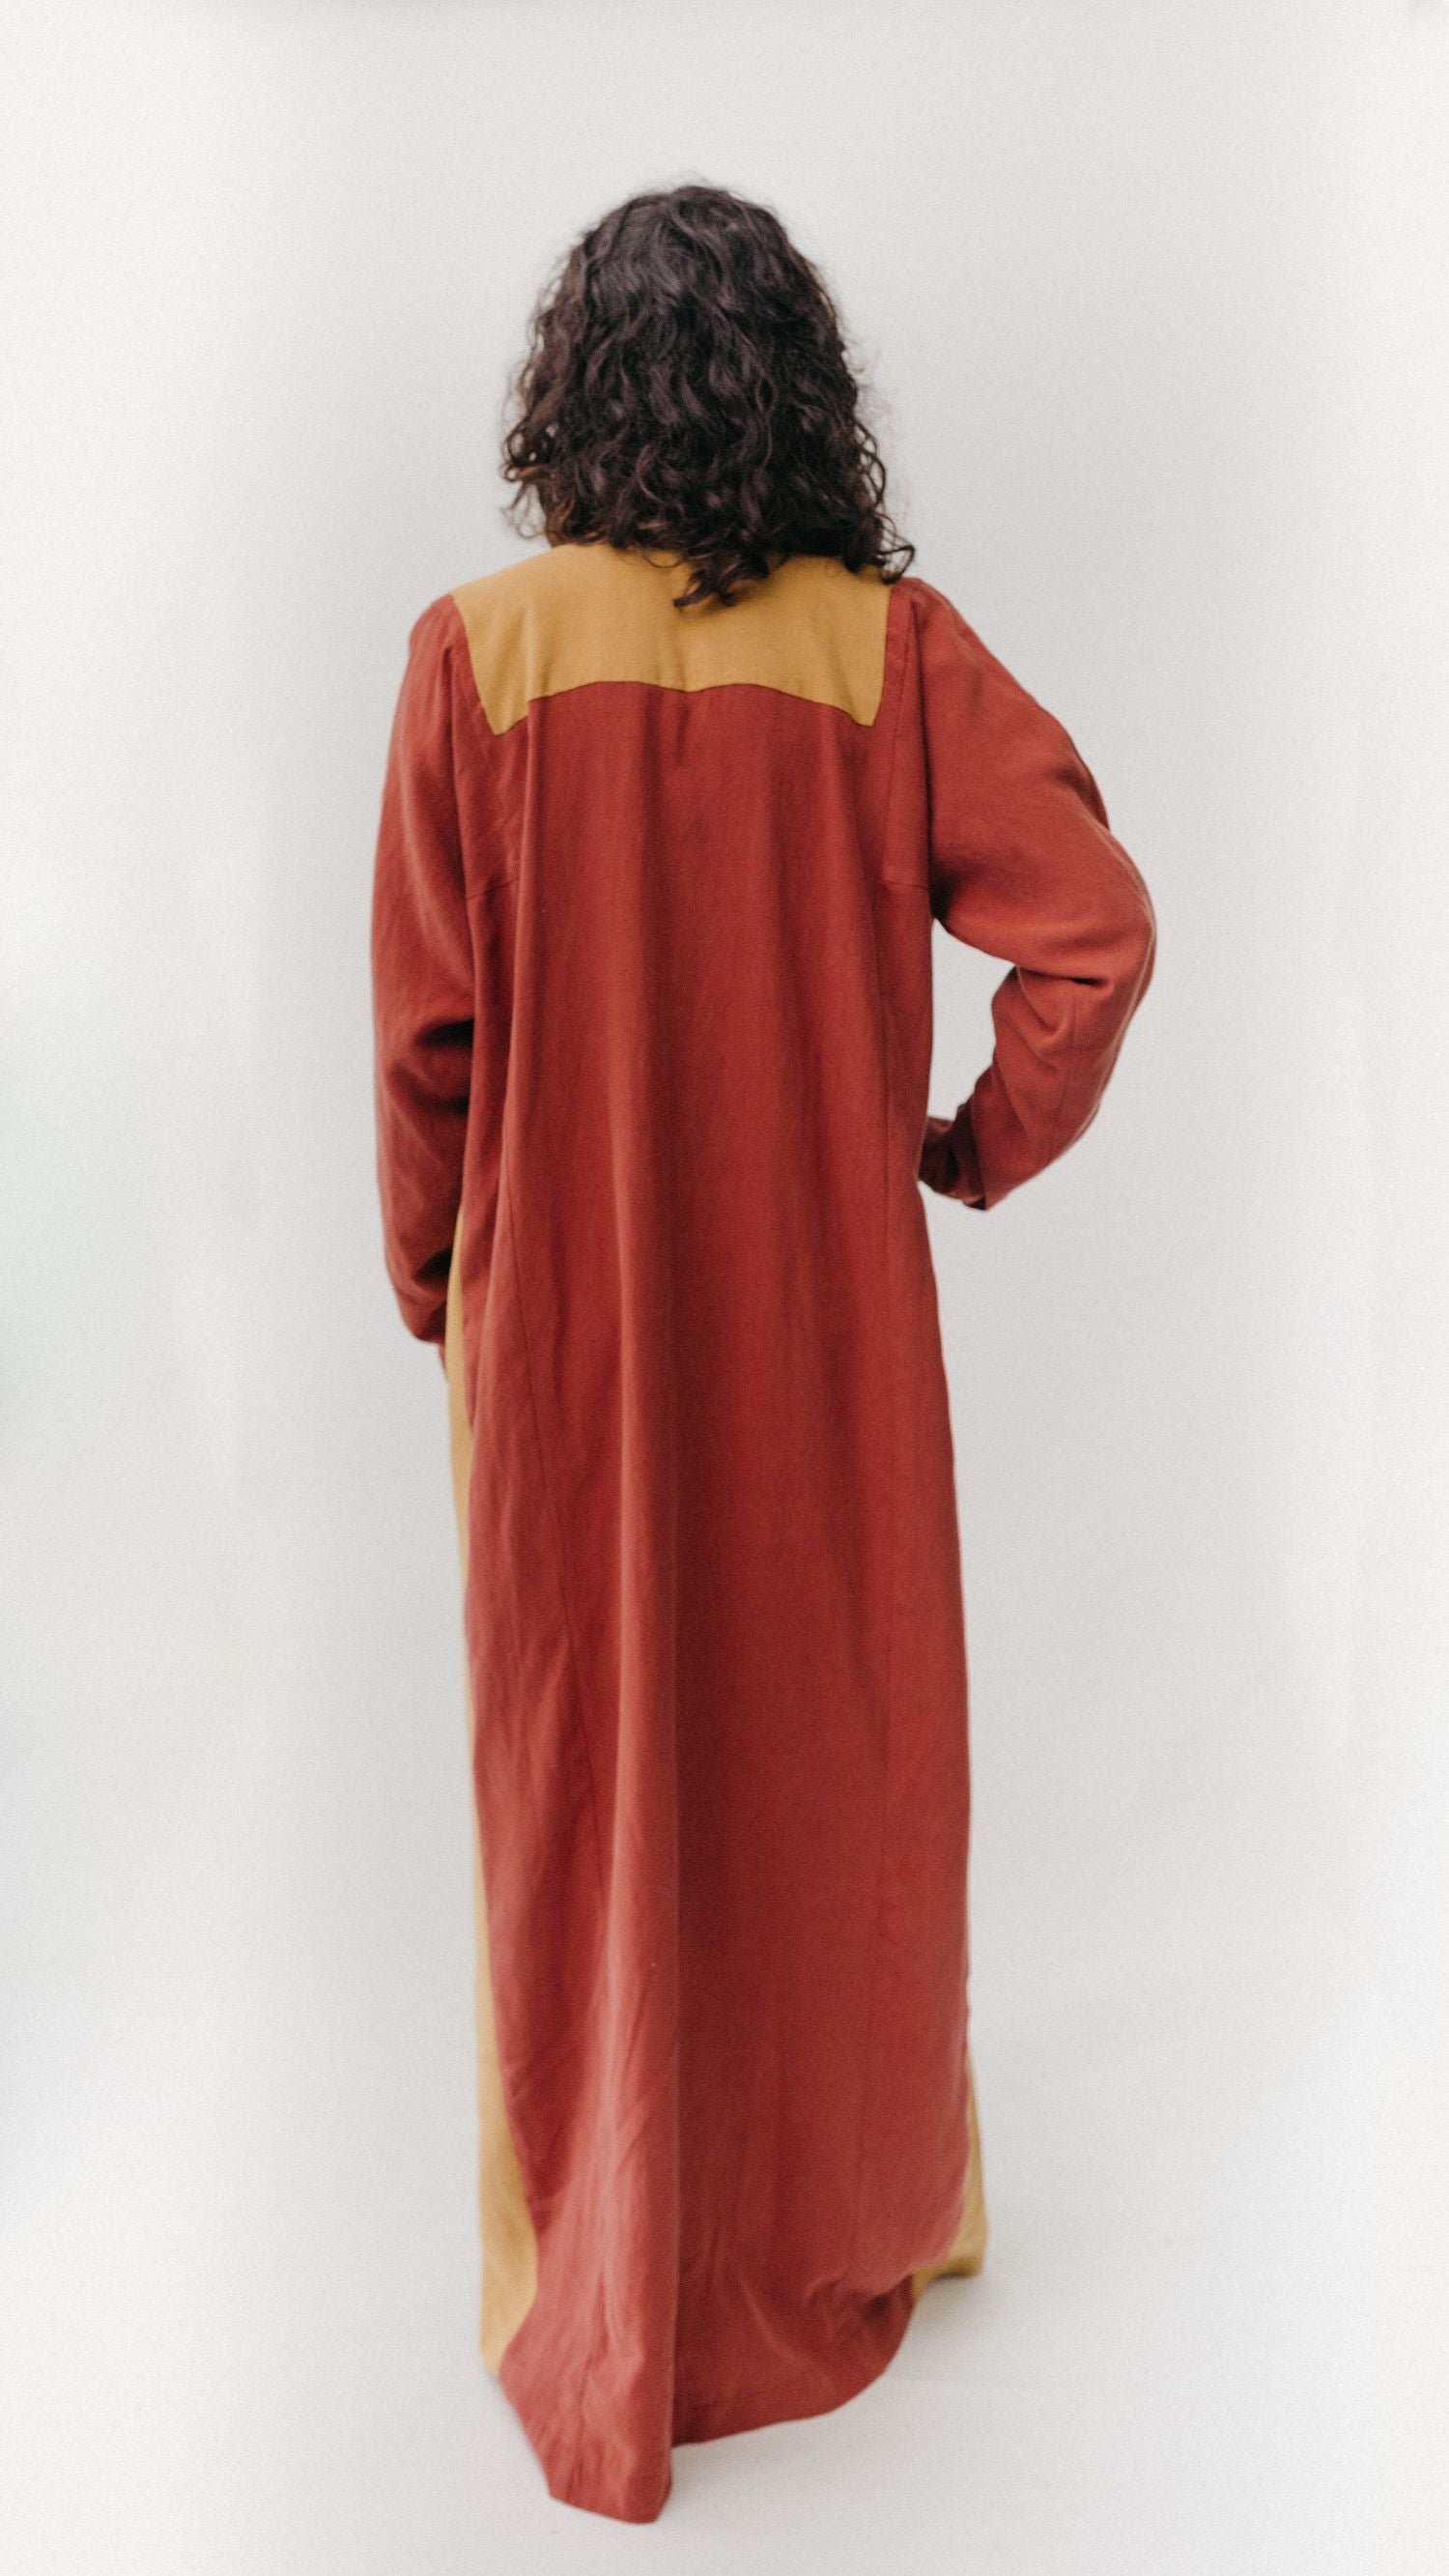 Back View of Gaza Dress. Woman wearing floor length red dress with mustard yellow yoke.